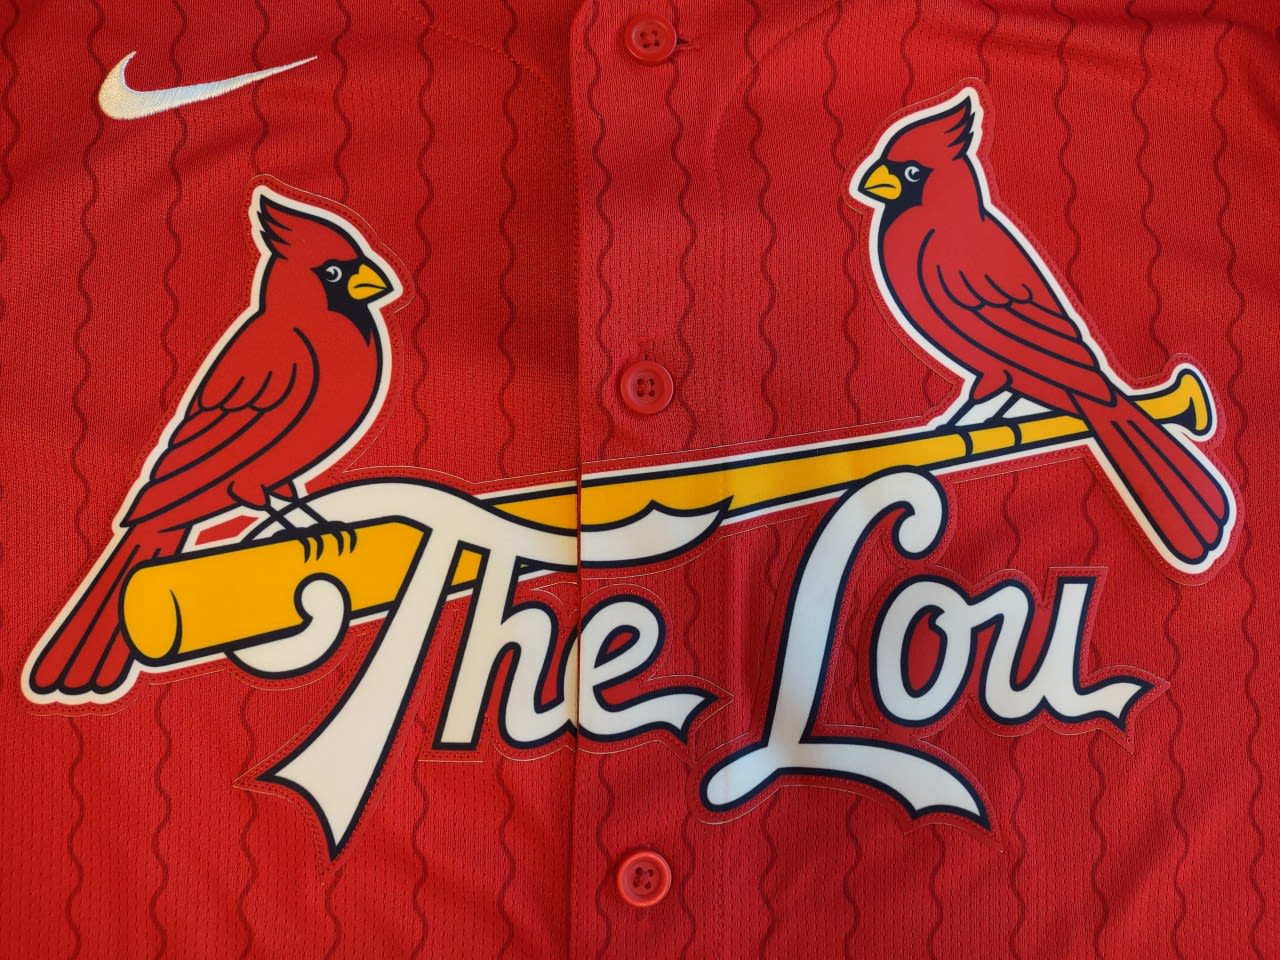 Introducing the St. Louis Cardinals’ City Connect uniforms